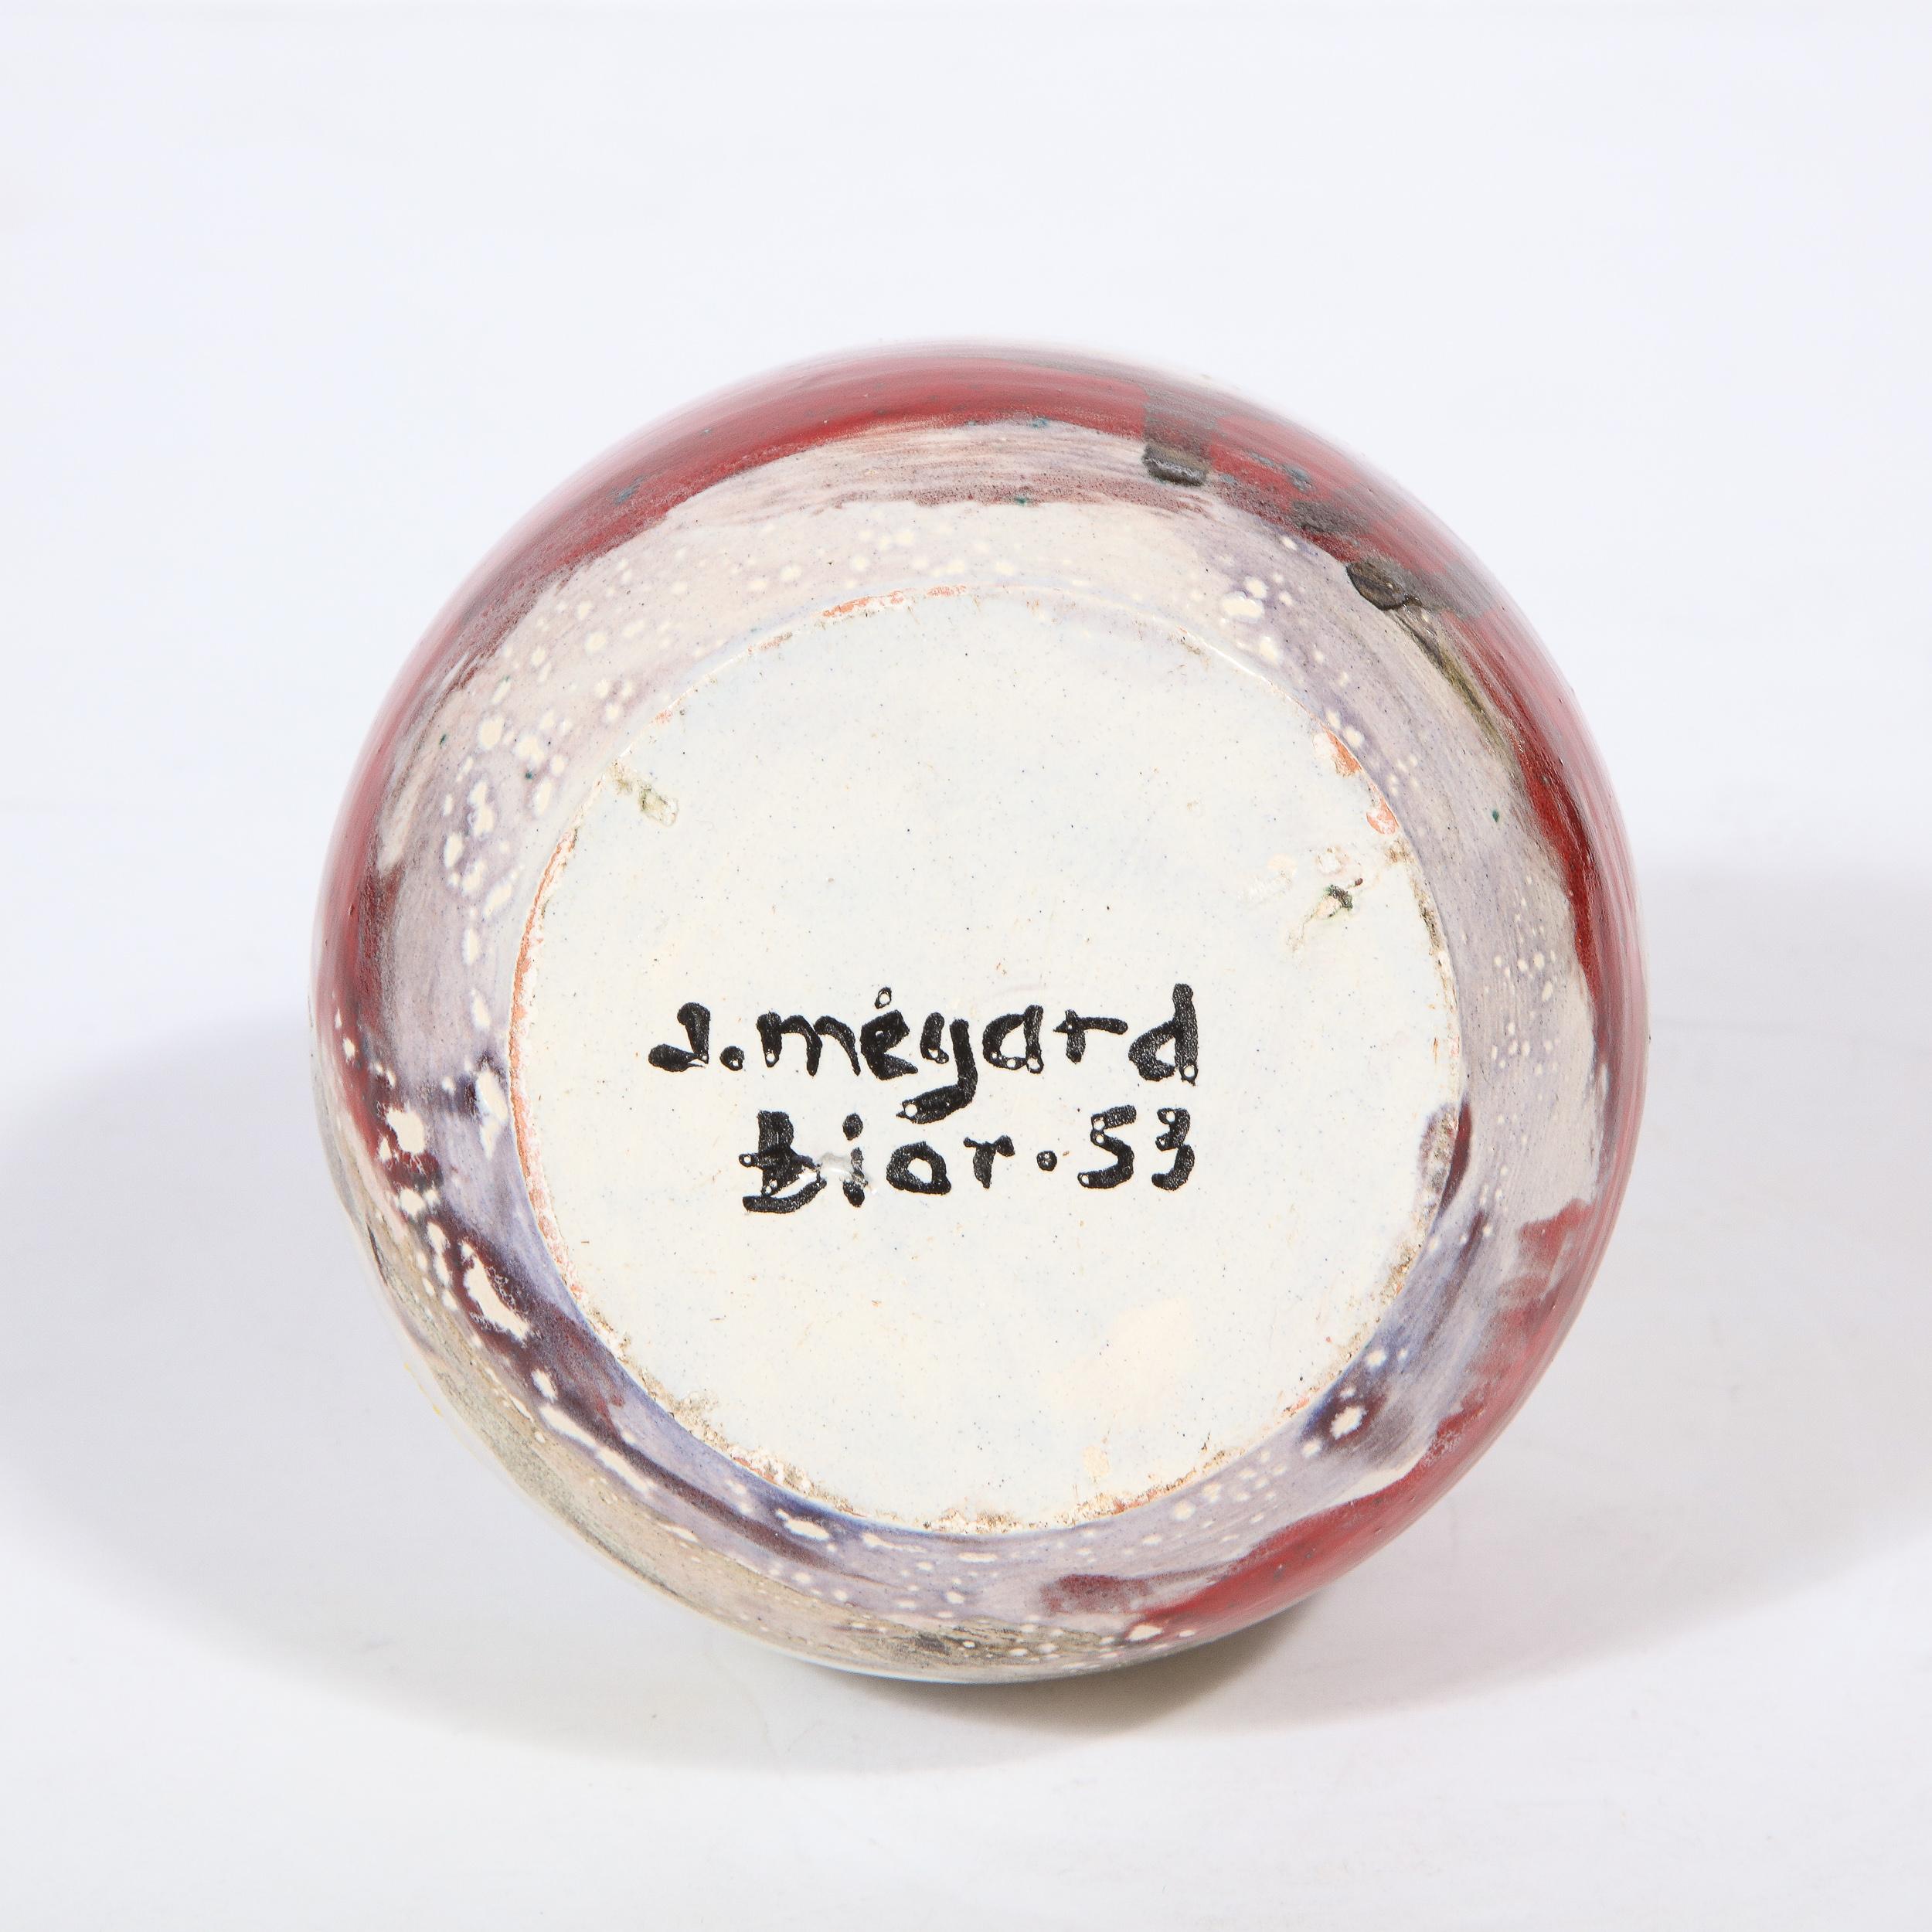 Mid-Century Modern Glazed Pottery Vase by Jean Mégard '1925-2015' For Sale 2